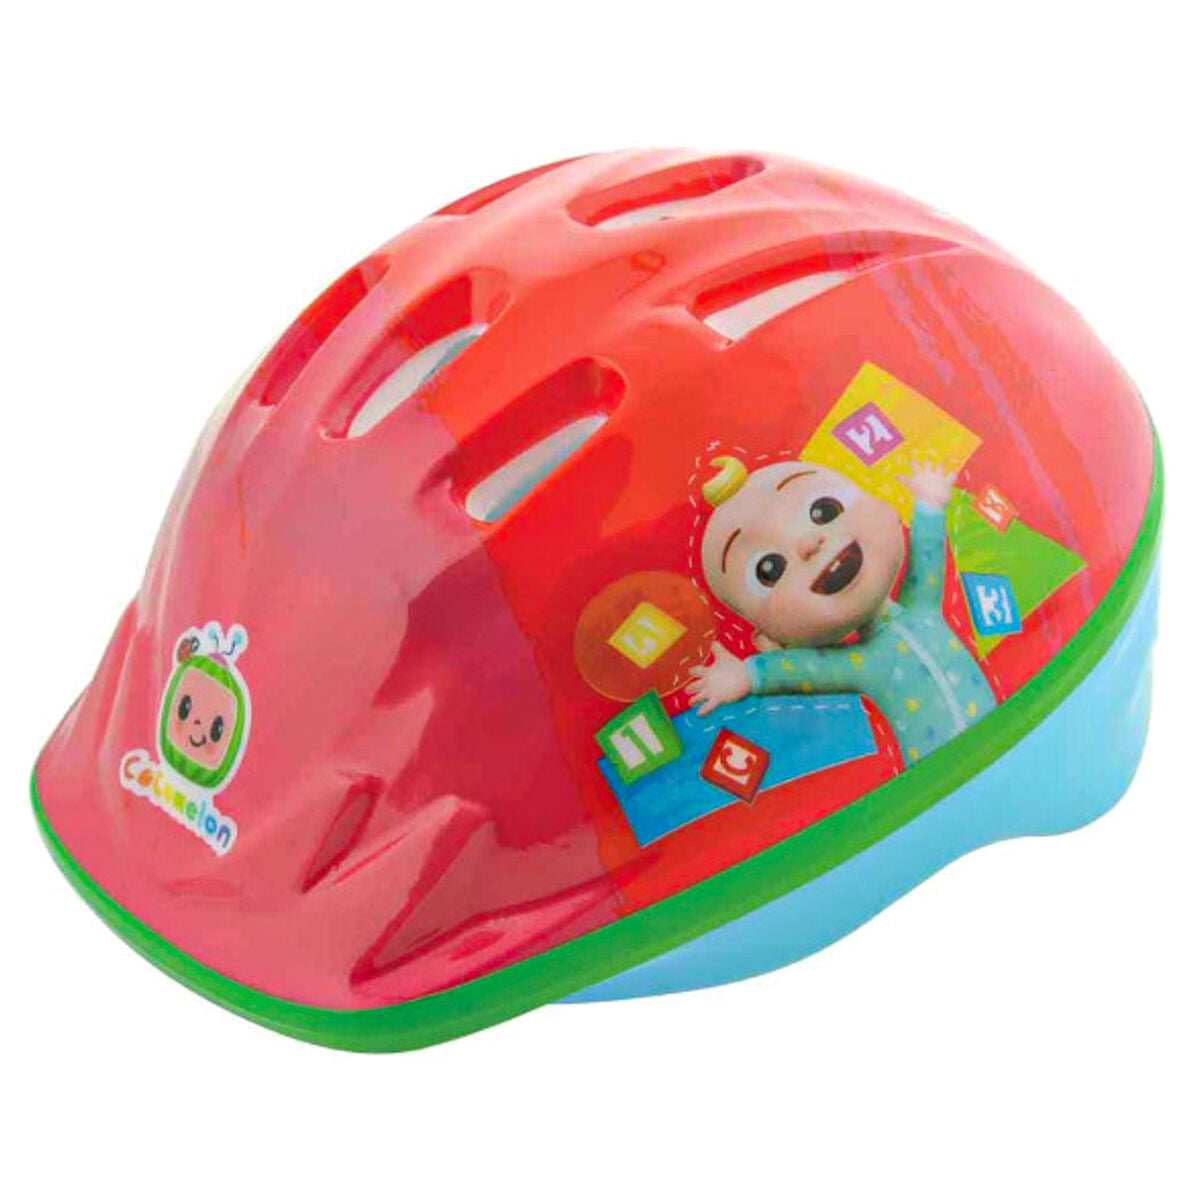 MV Sports CoComelon Safety Helmet 46cm-54cm